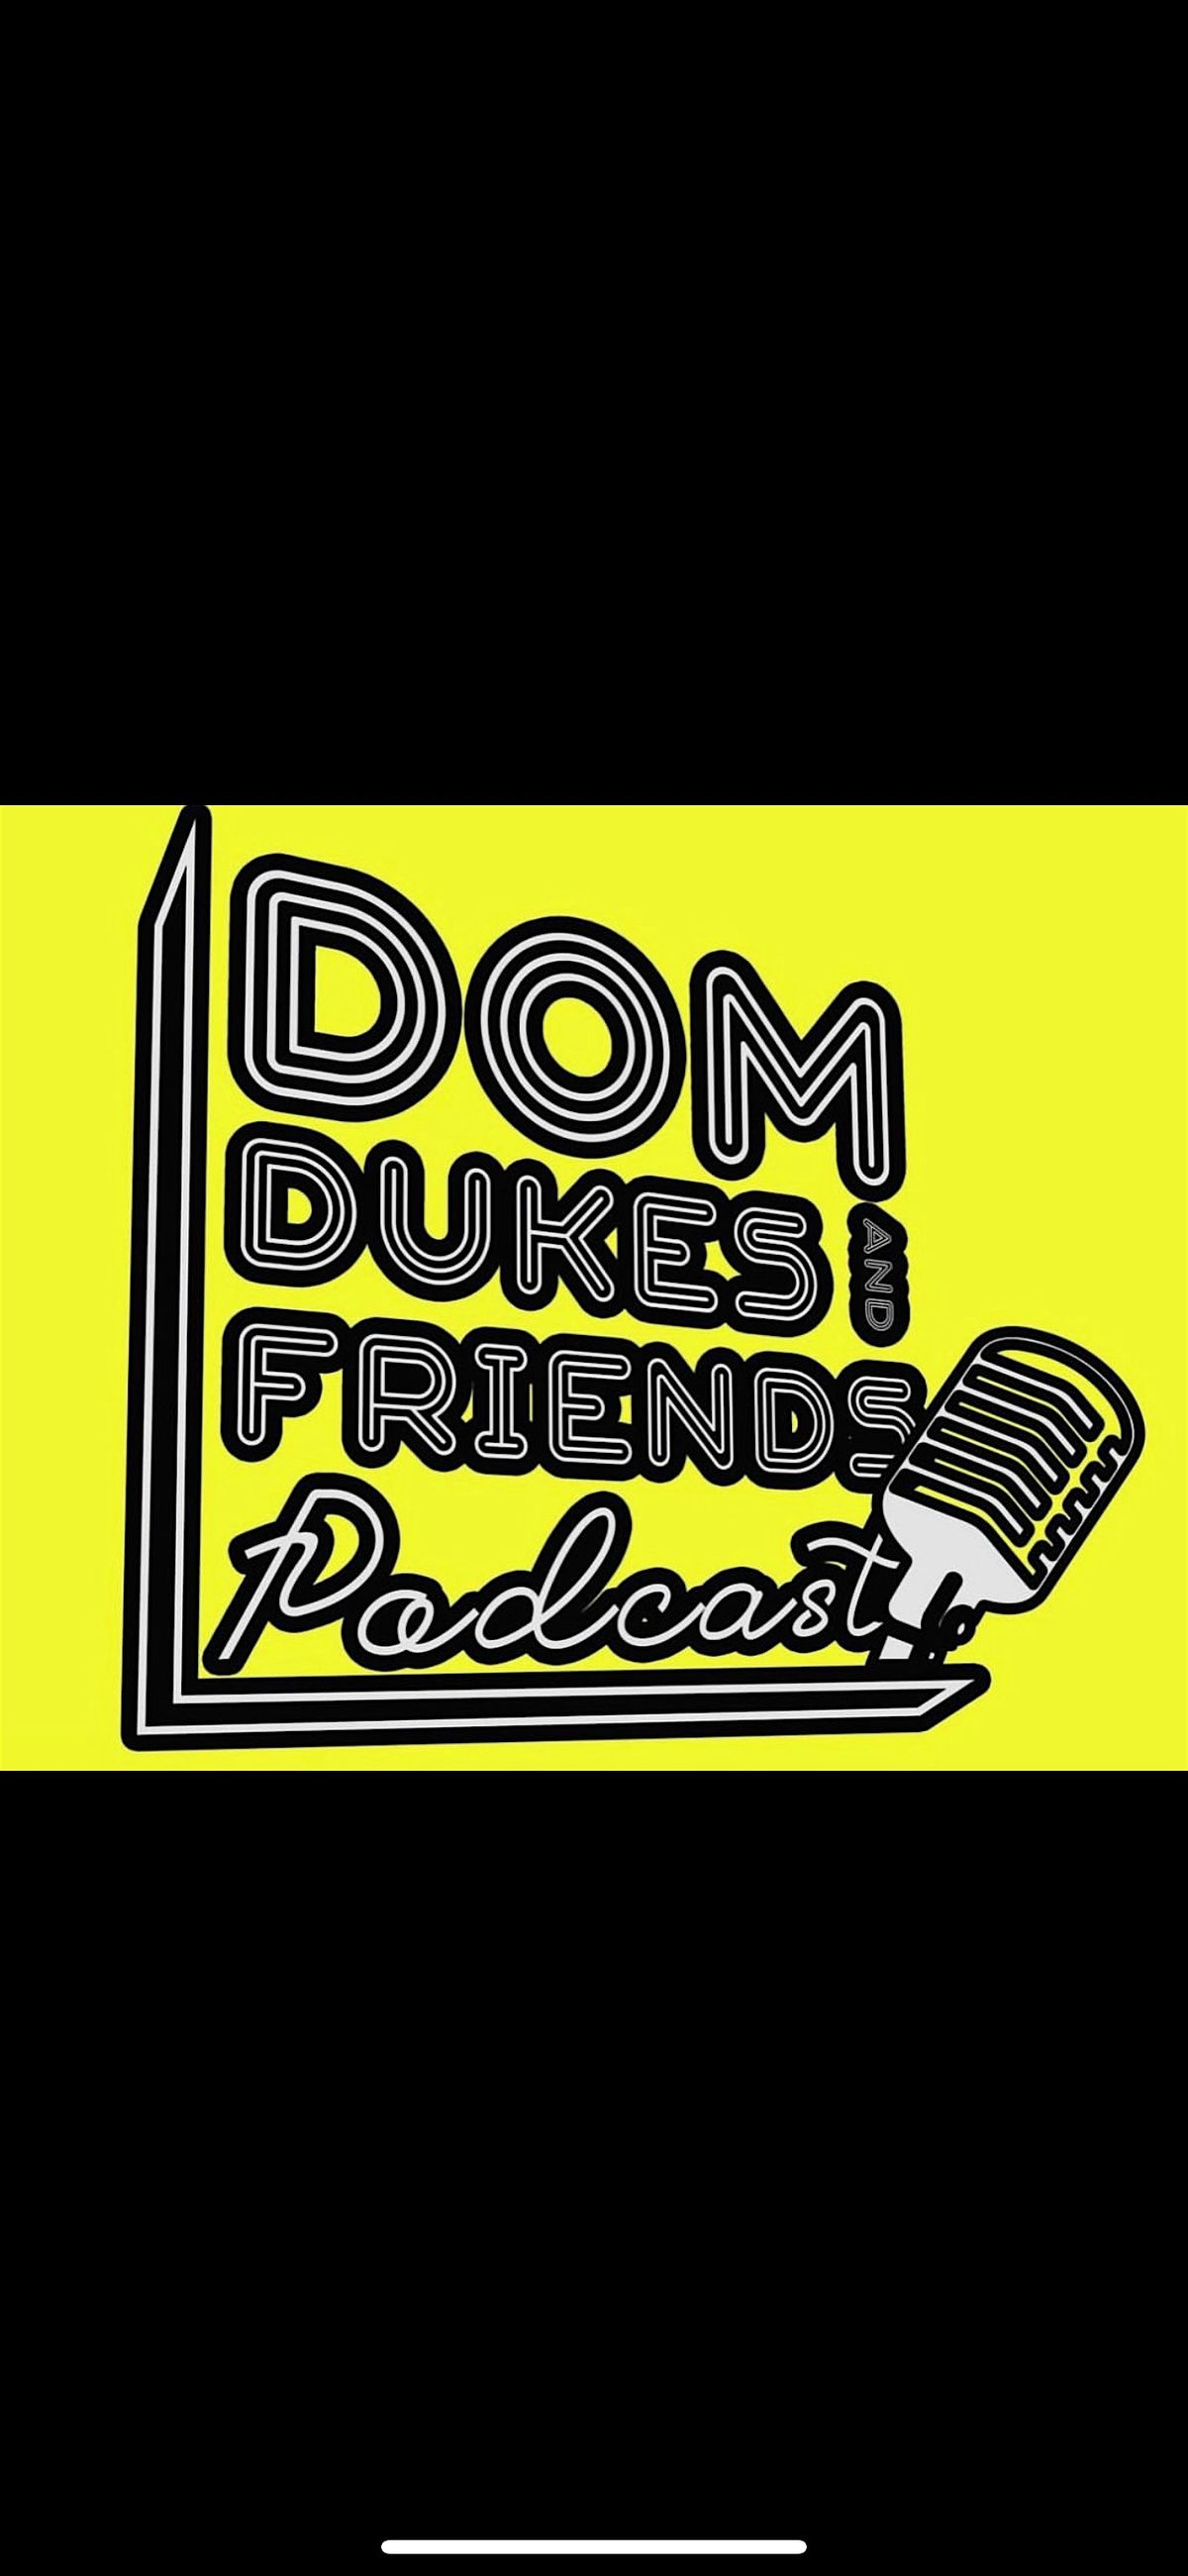 XLNZ Presents: Dom Dukes & Friends Podcast LIVE